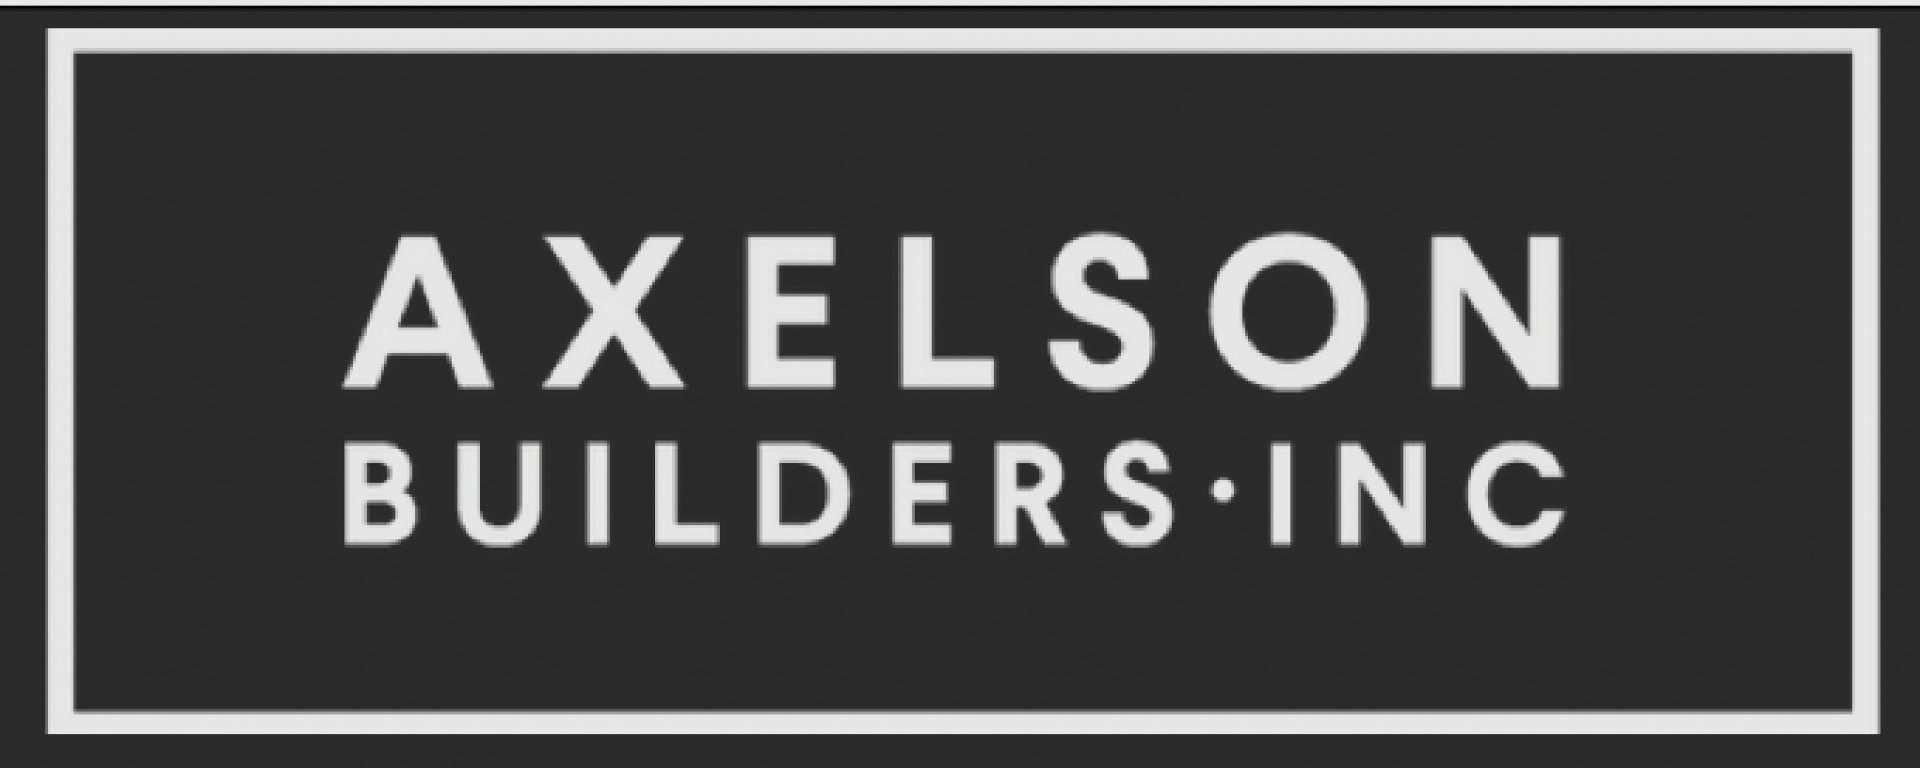 Axelson Builders Inc company logo